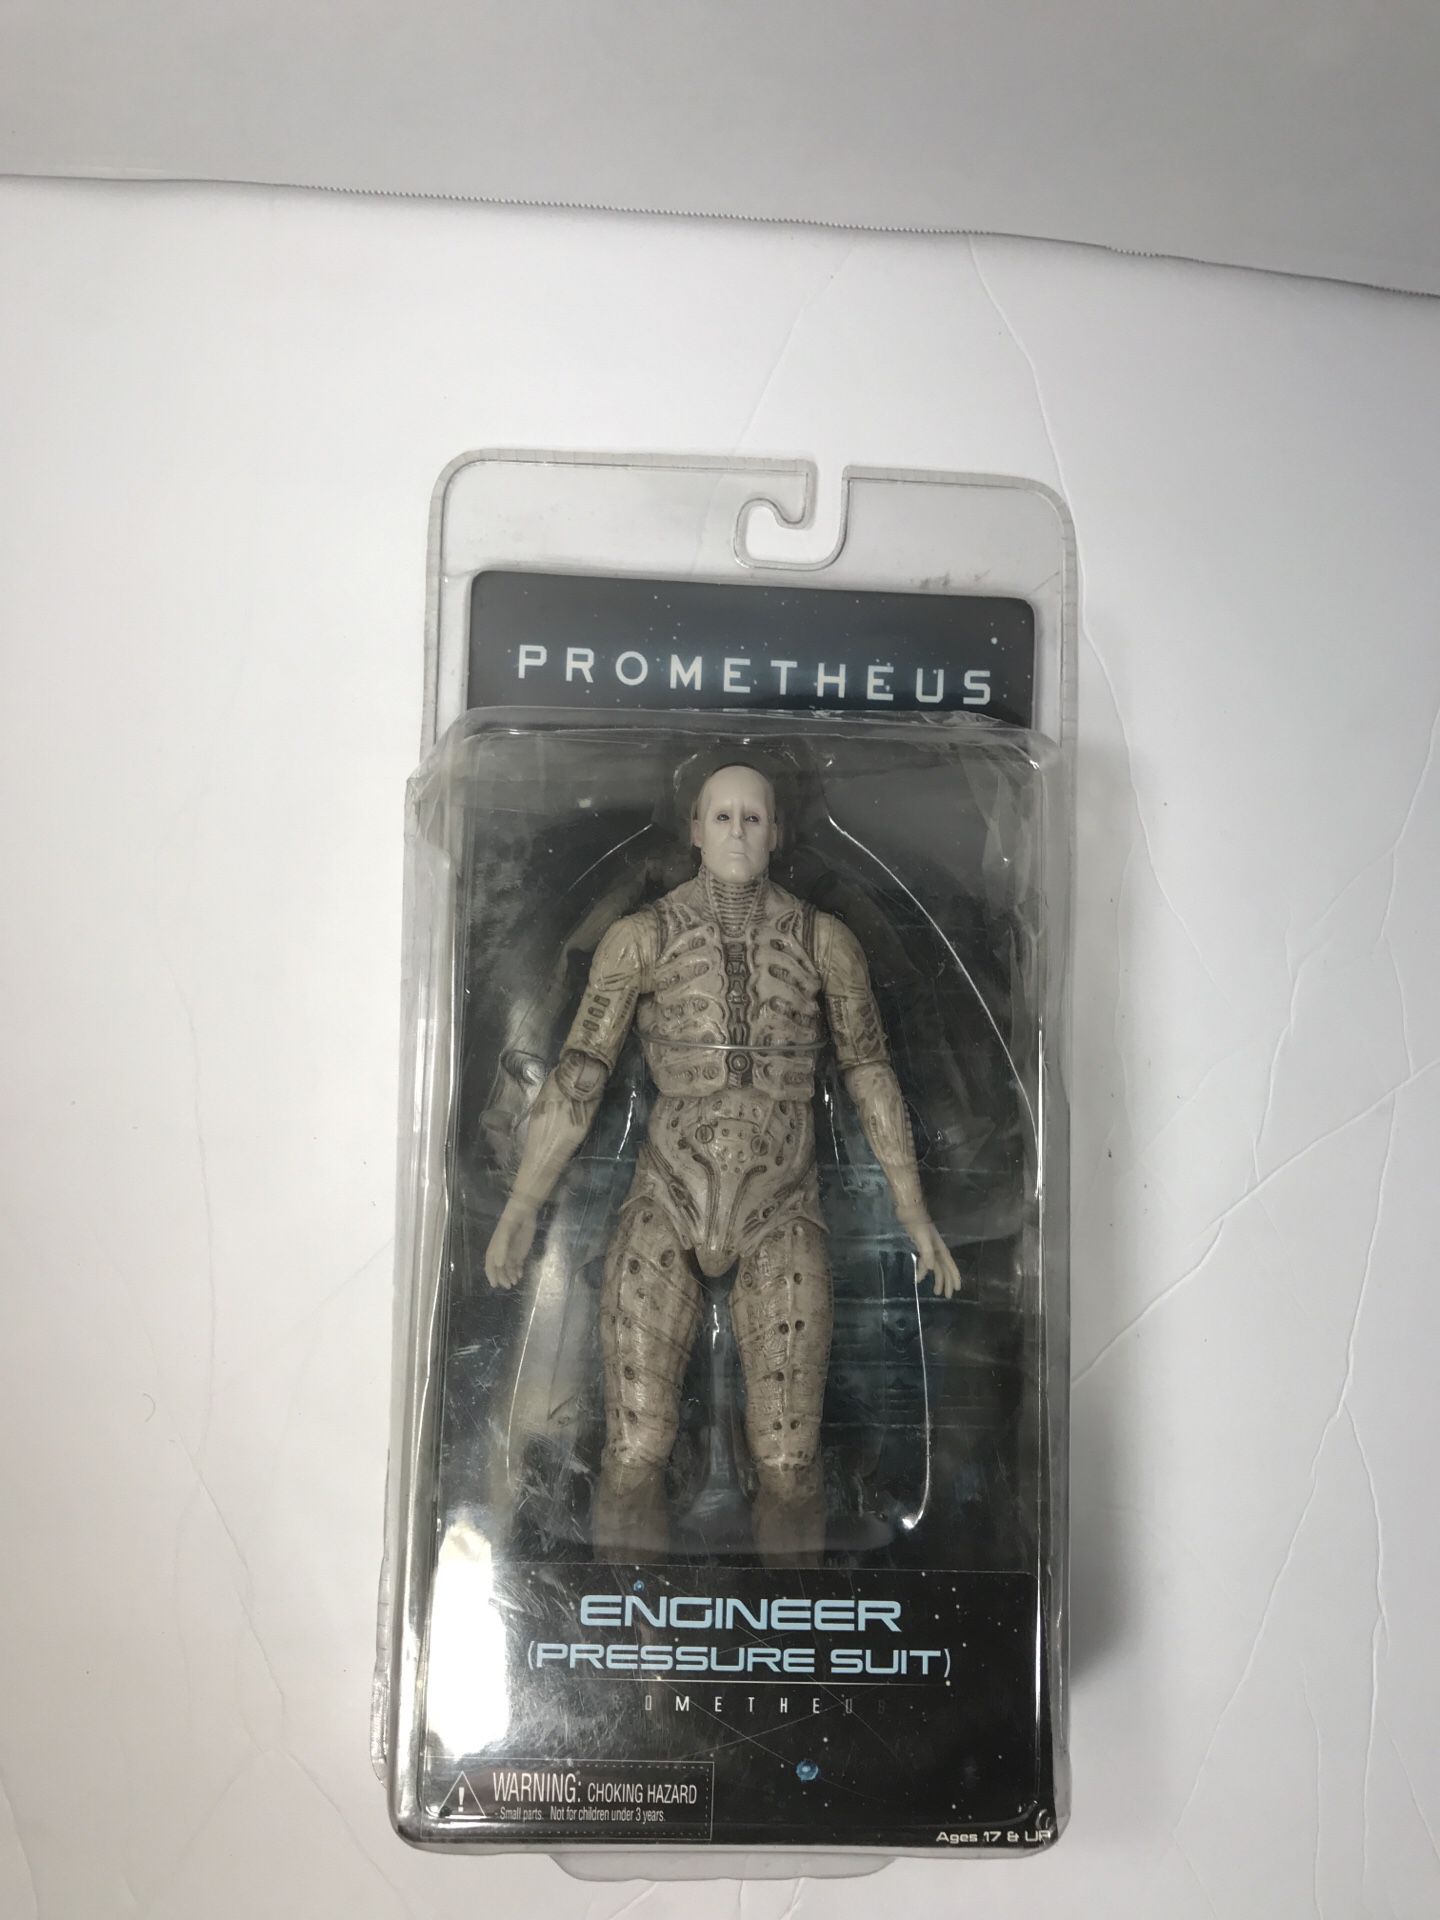 Prometheus engineer pressure suit action figure !!! New in box 📦